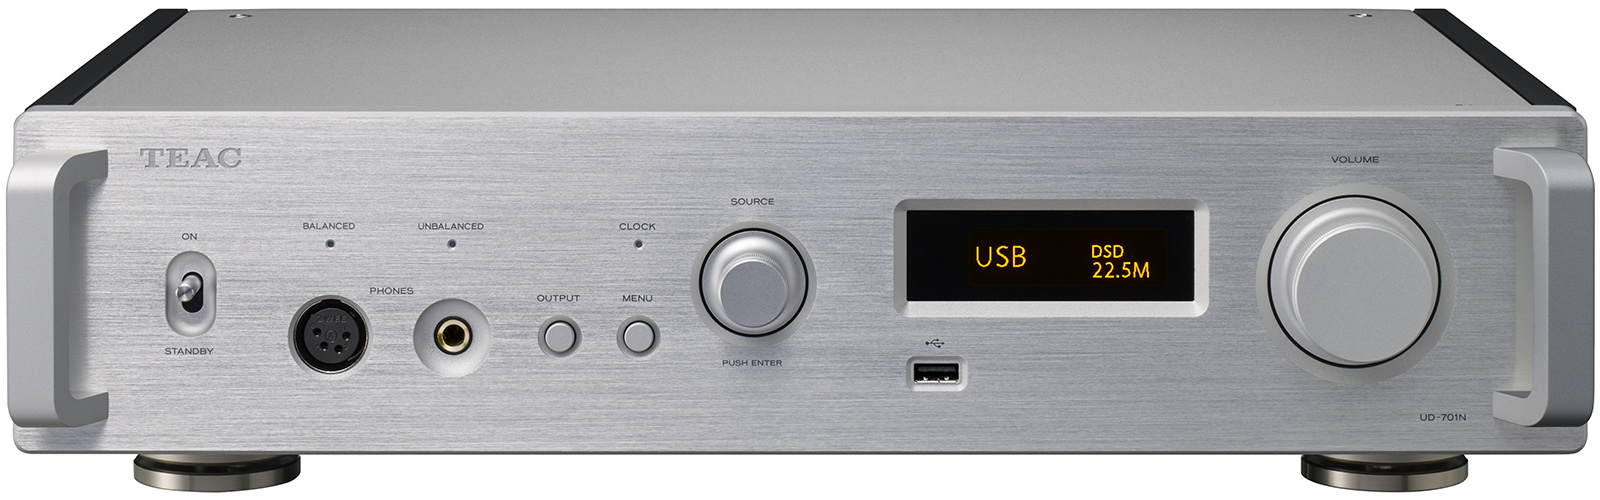 Сетевые аудио проигрыватели Teac UD-701N silver сетевые аудио проигрыватели avm as 2 3 silver